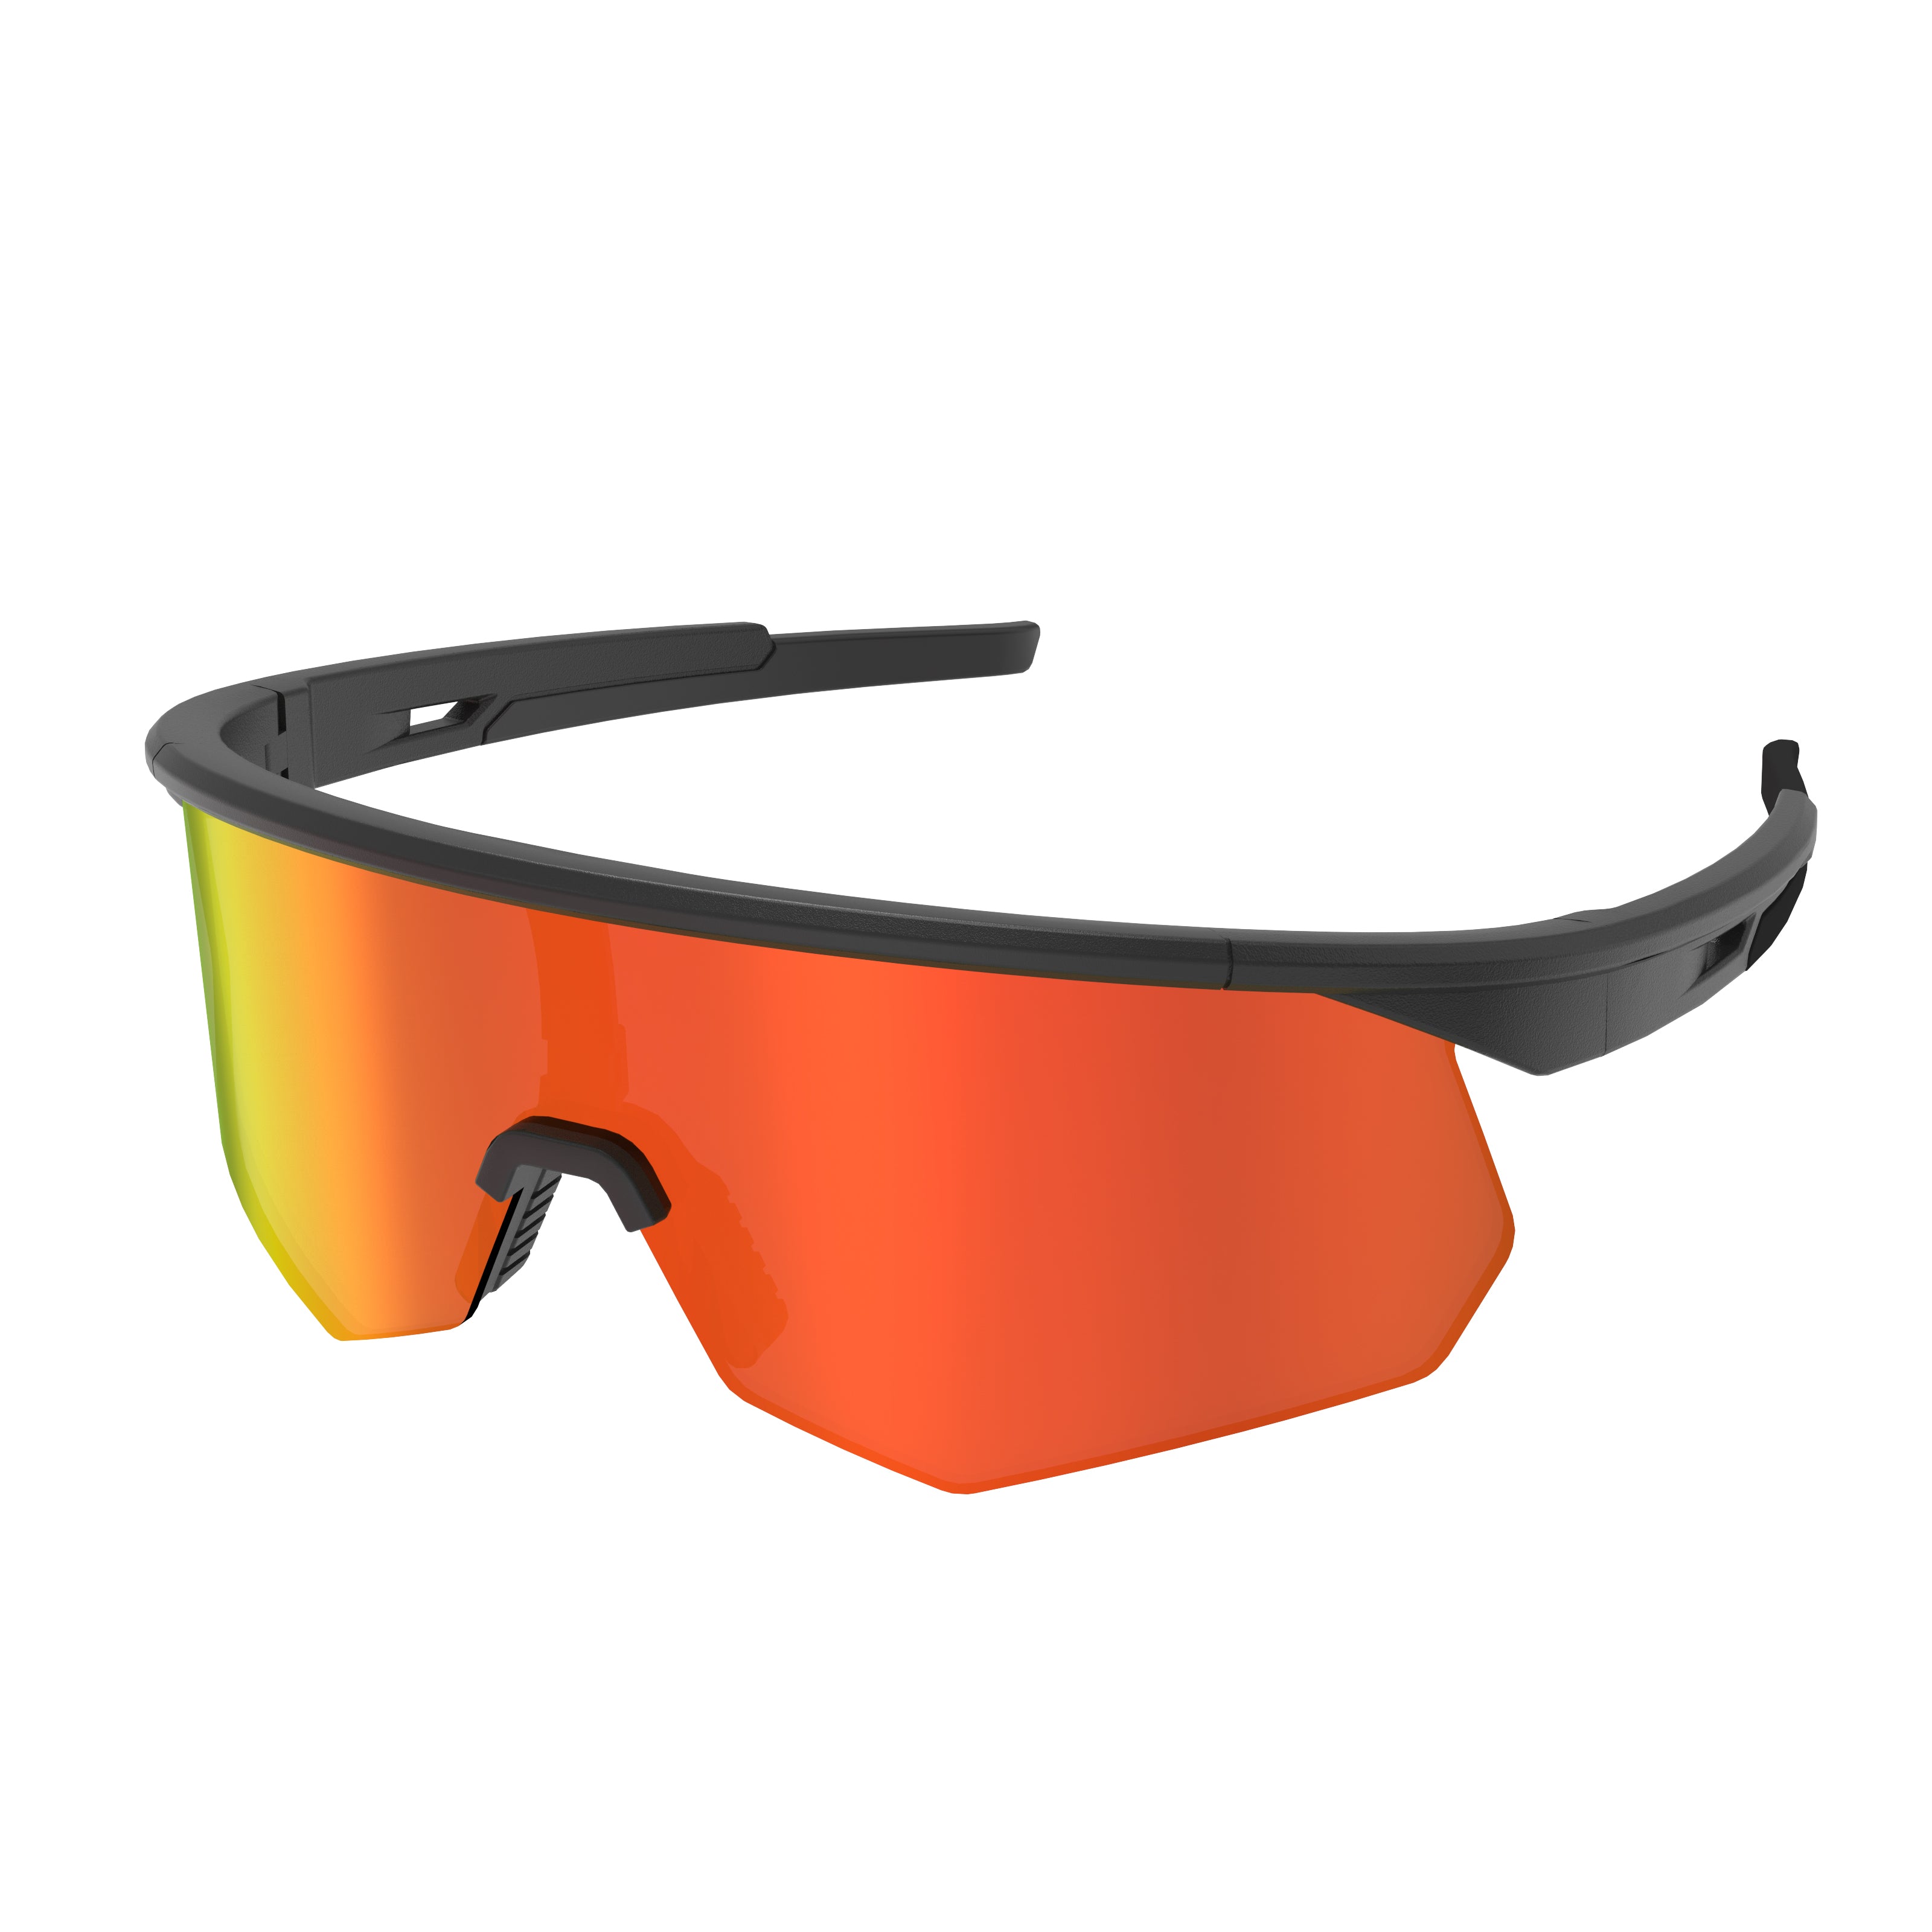 Polarized Sports Sunglasses for Men Women, UV400 Protection Driving Fishing Cycling Running Mountain Bike Sunglasses